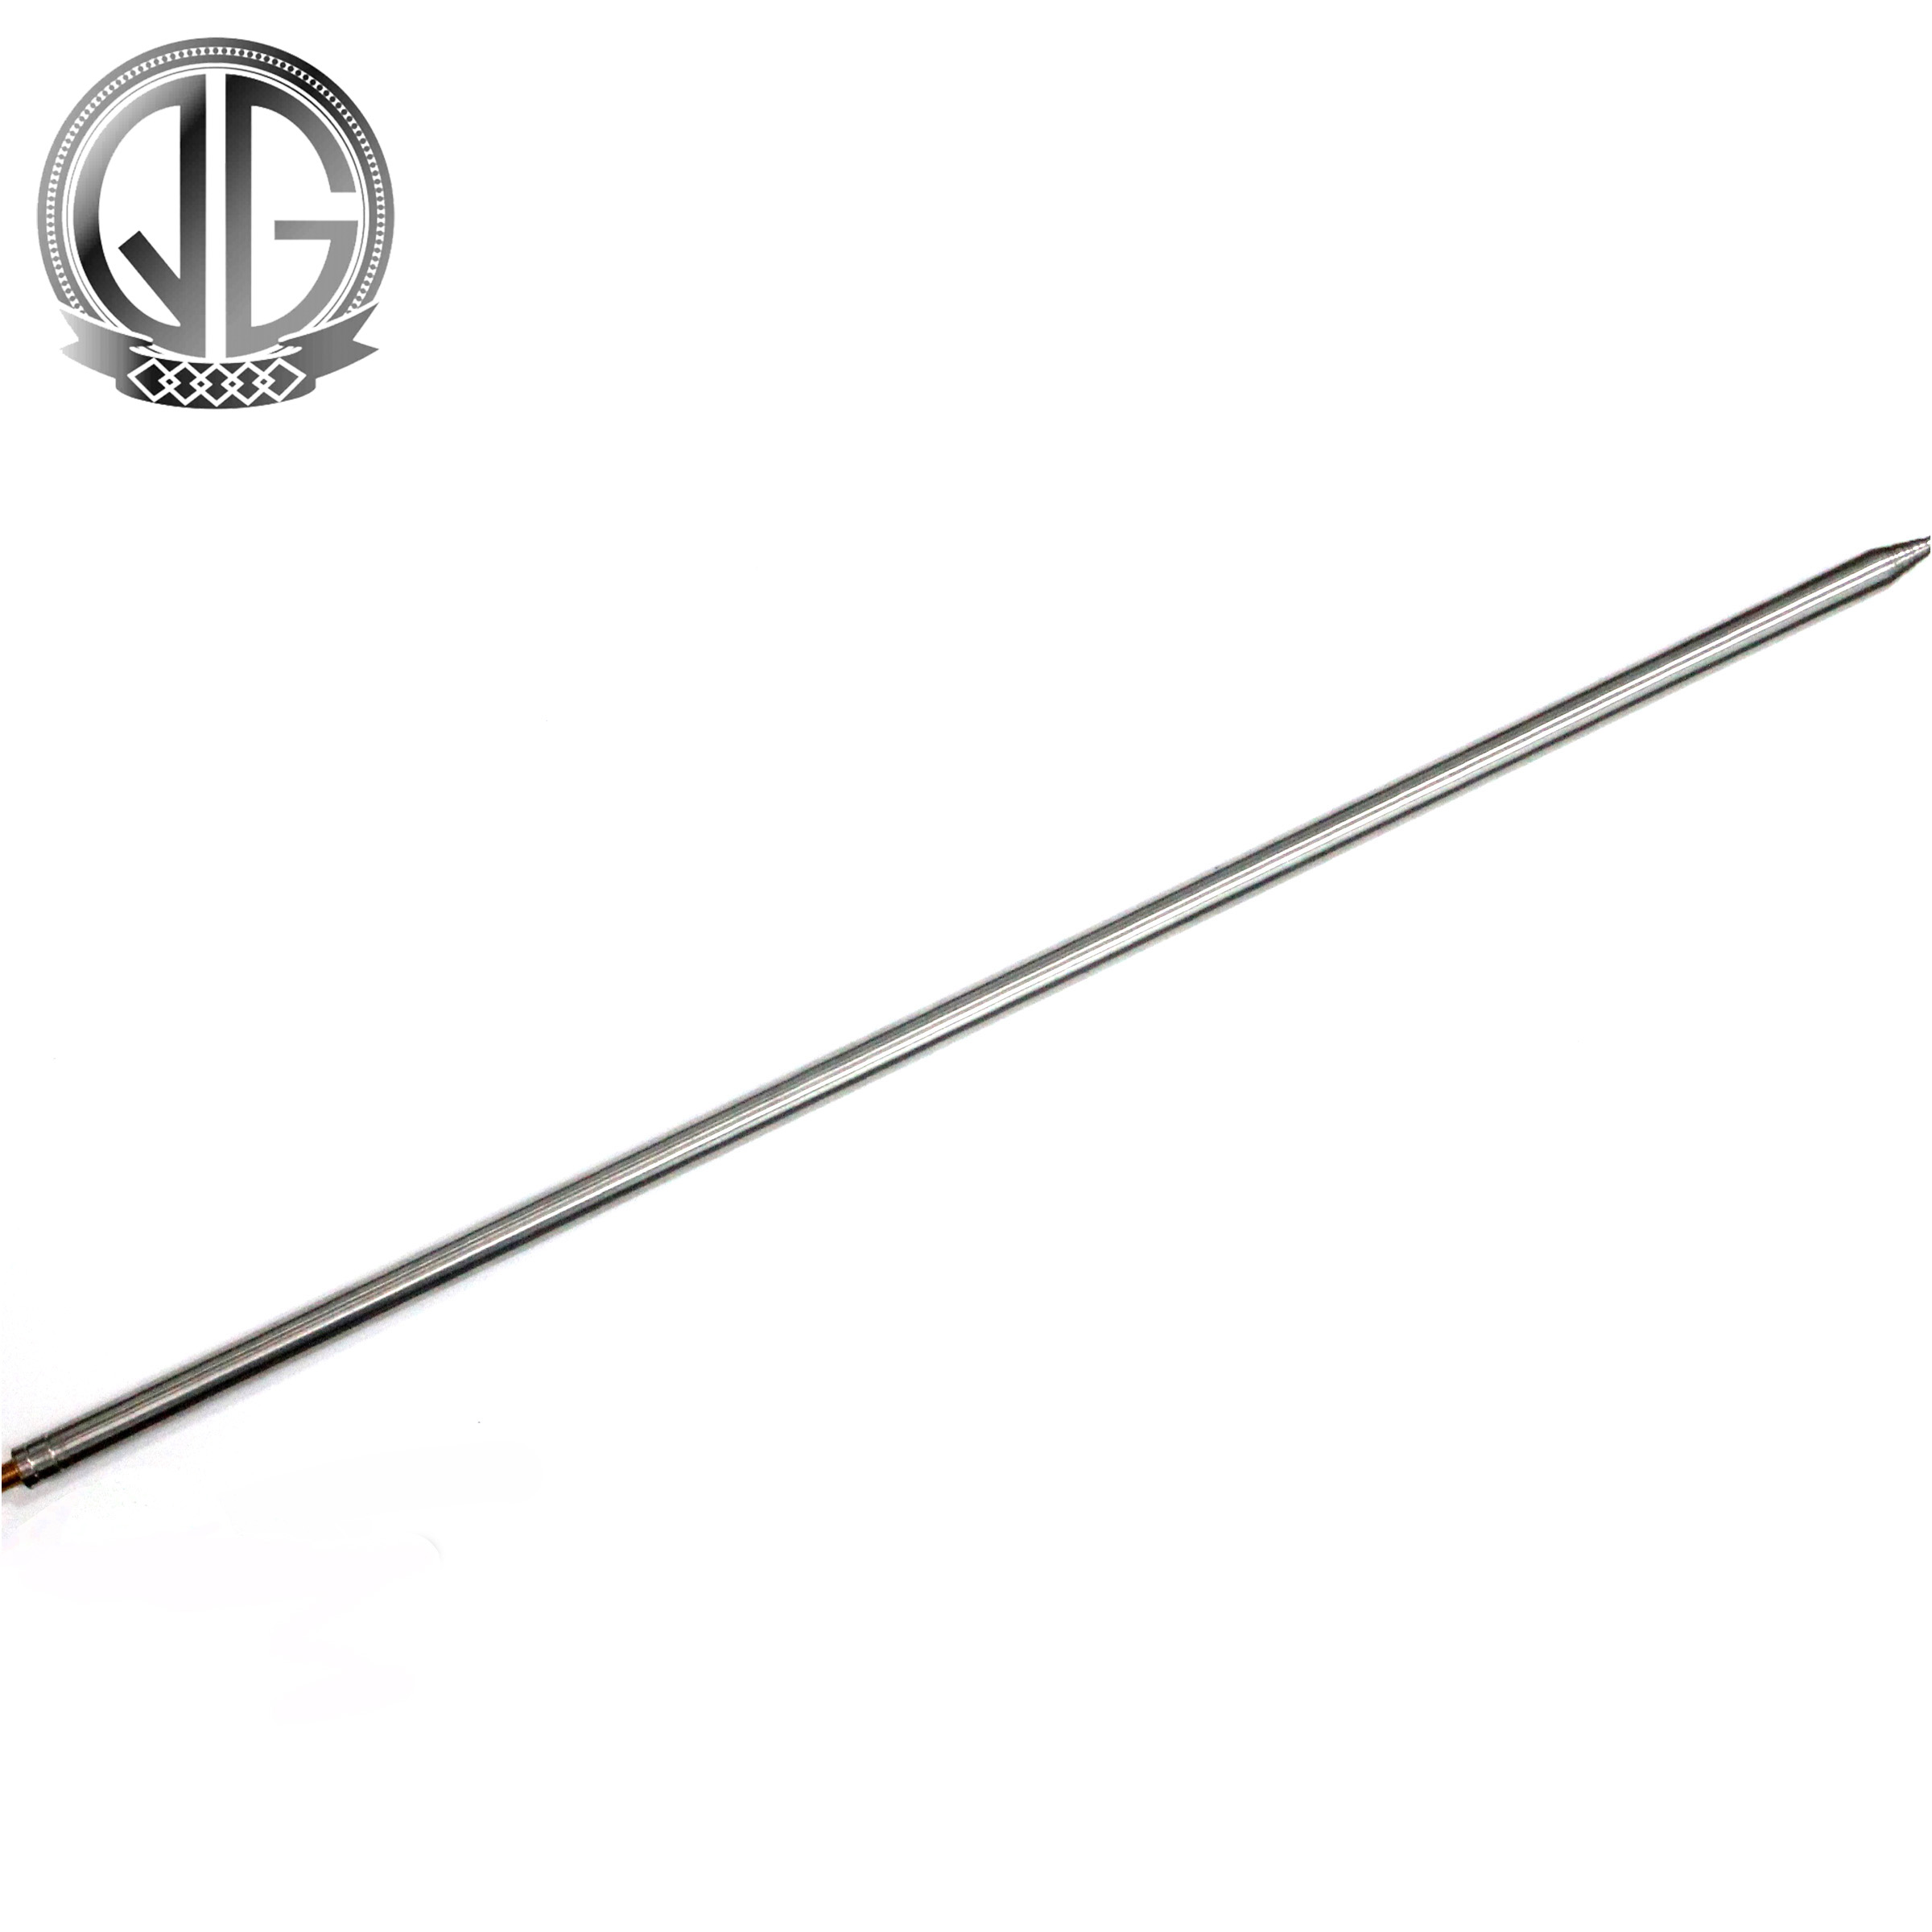 Stainless Steel 304 Telescopic Pole Extension Pipe ကို Thread ဖြင့် ထုတ်လုပ်သည်။